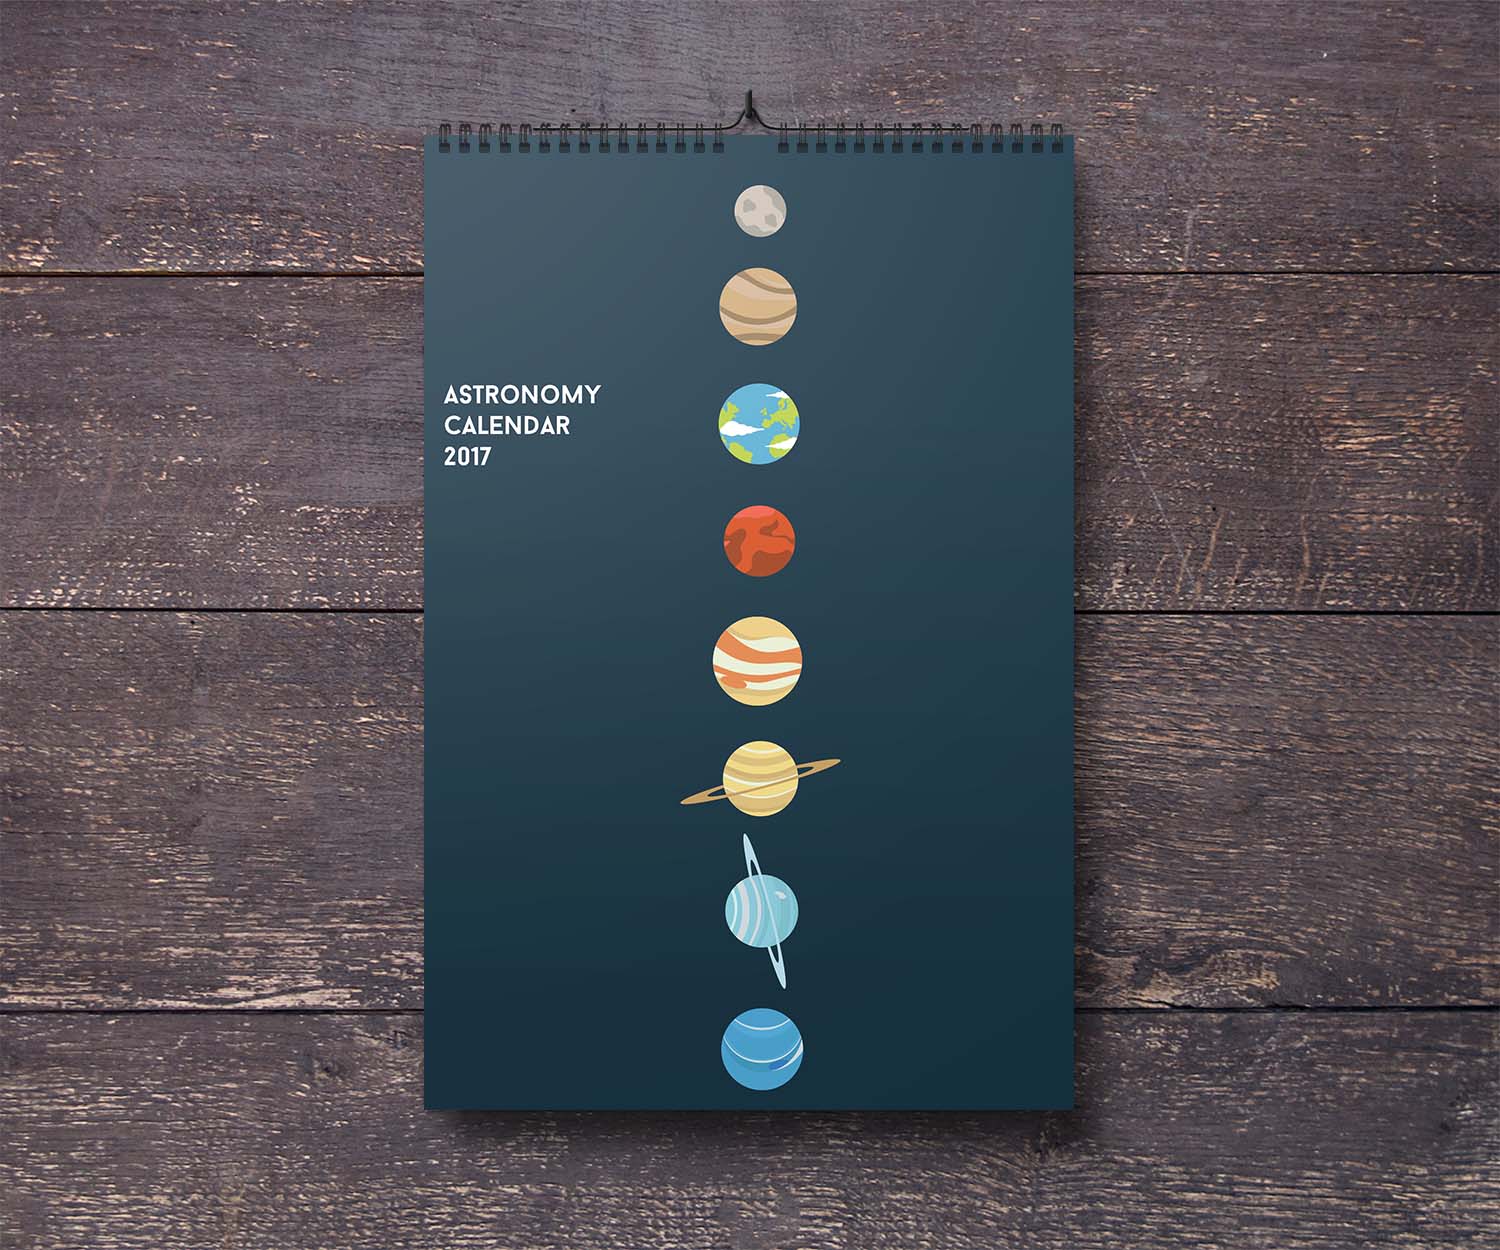 Space Calendar Cover2.jpg